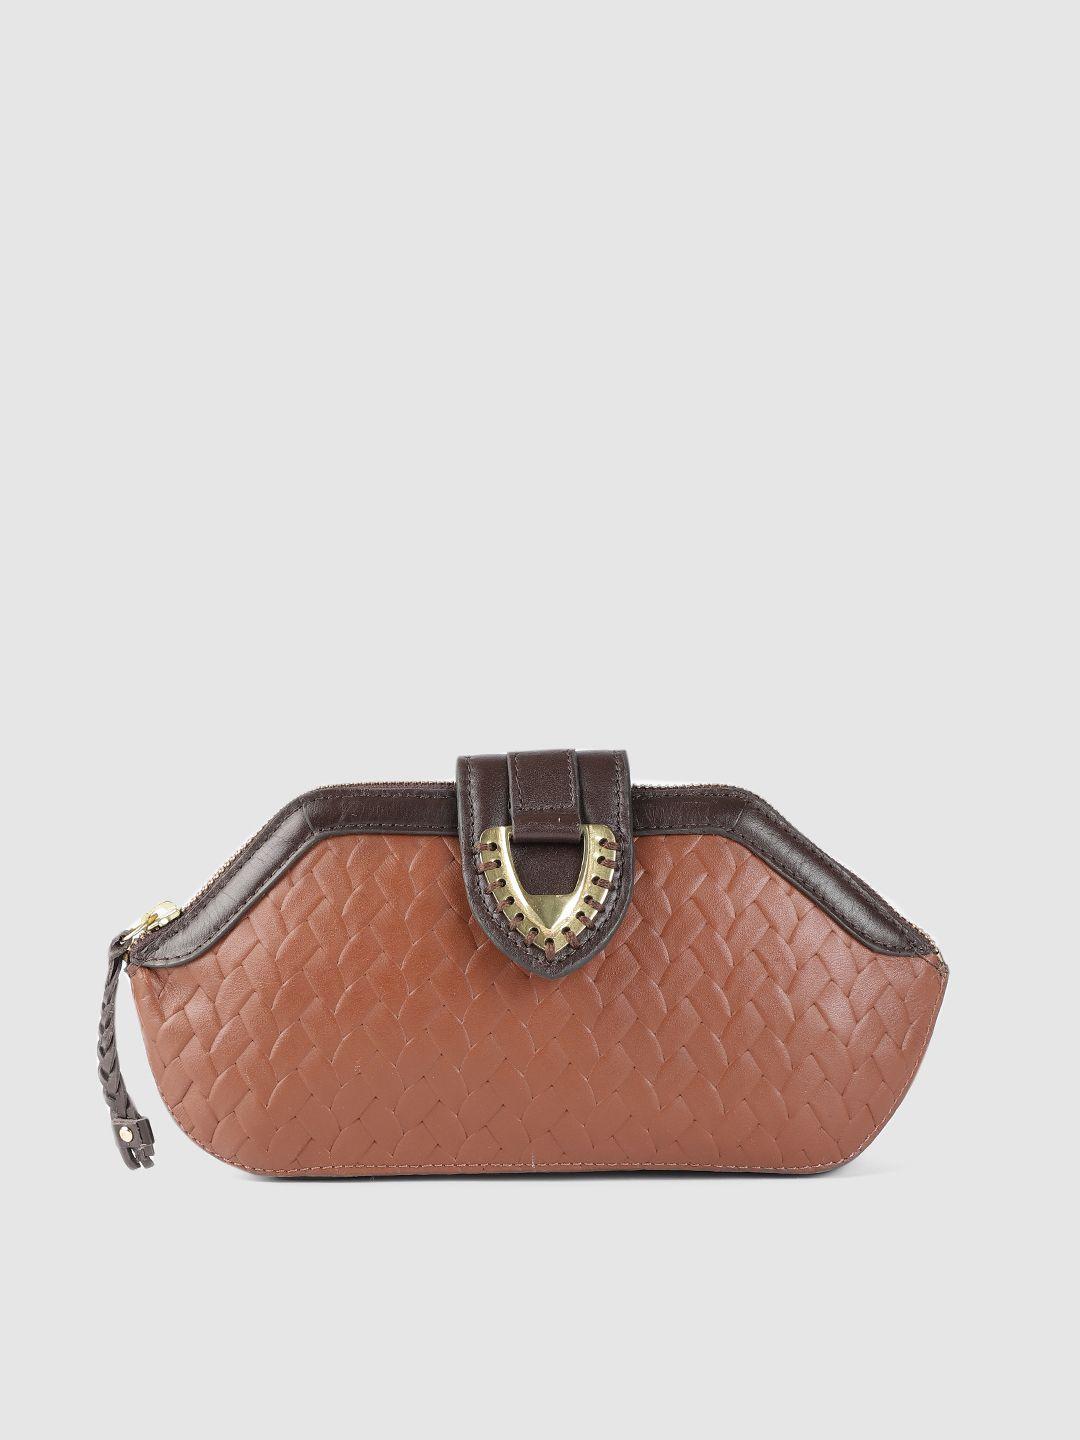 hidesign tan brown textured liya w1 leather purse clutch